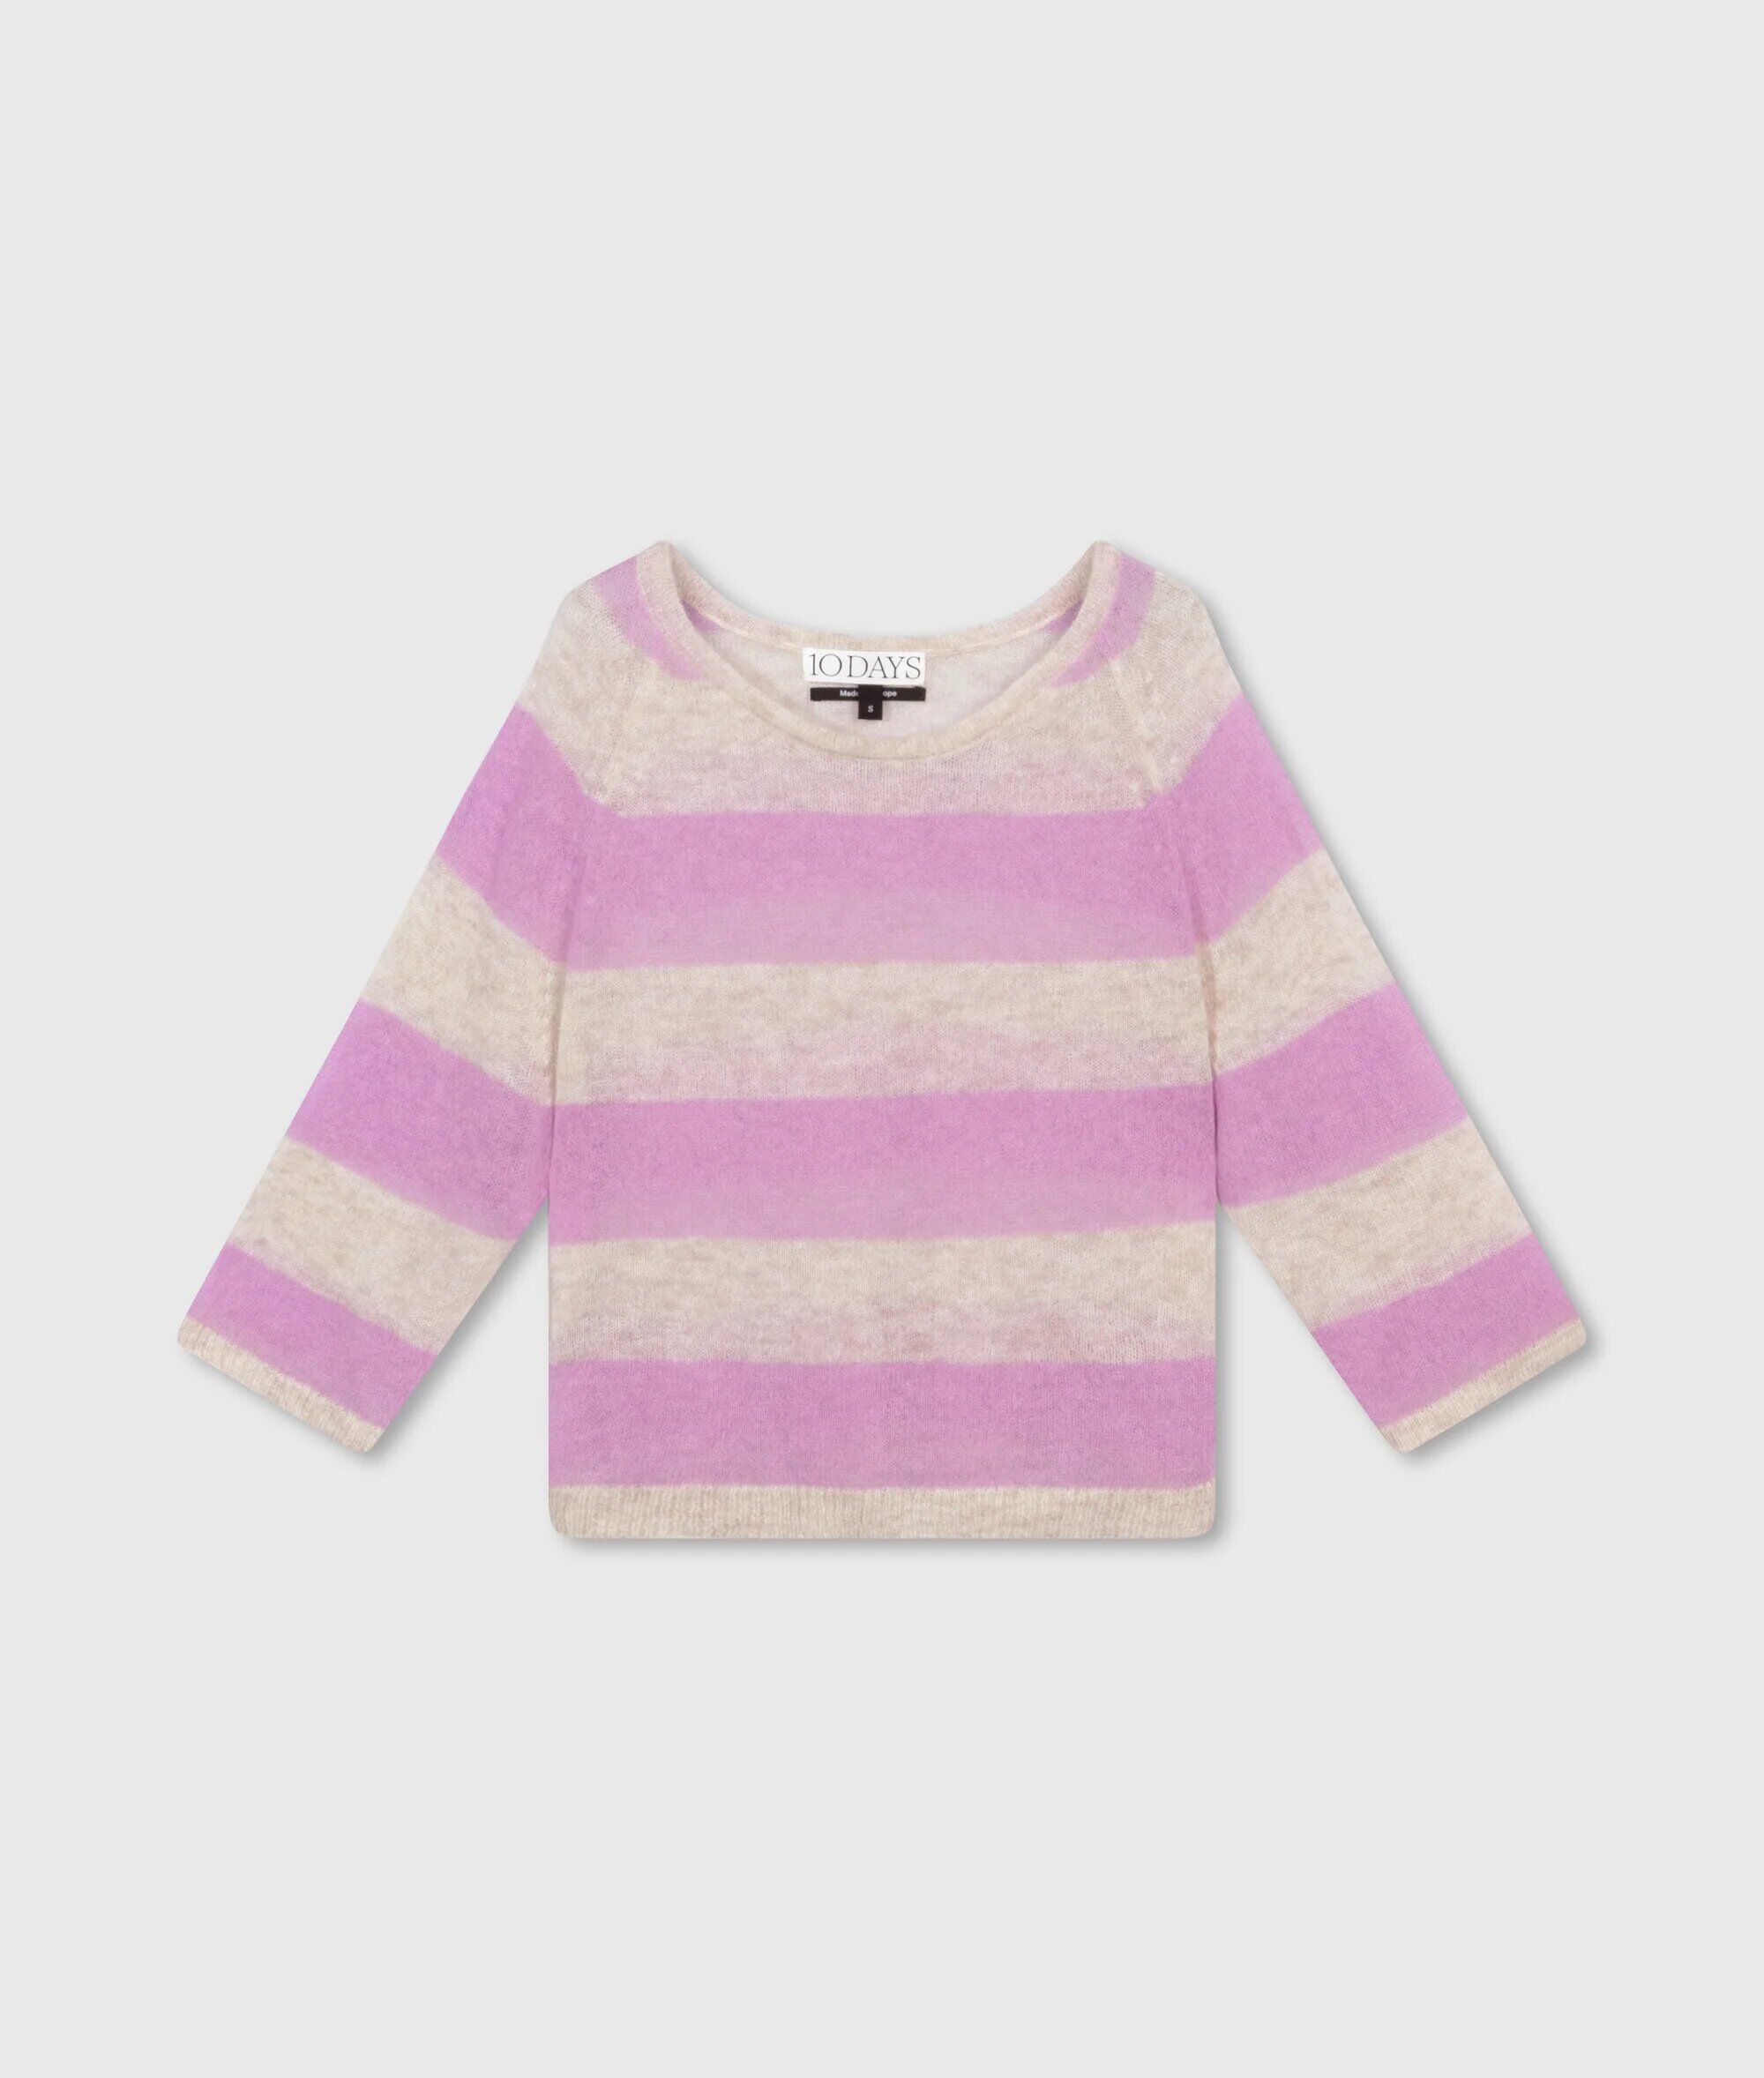 20 606 4202 3051 10days Amsterdam Light Safari Violet Lila Sweater Thin Knit Stripes (2)